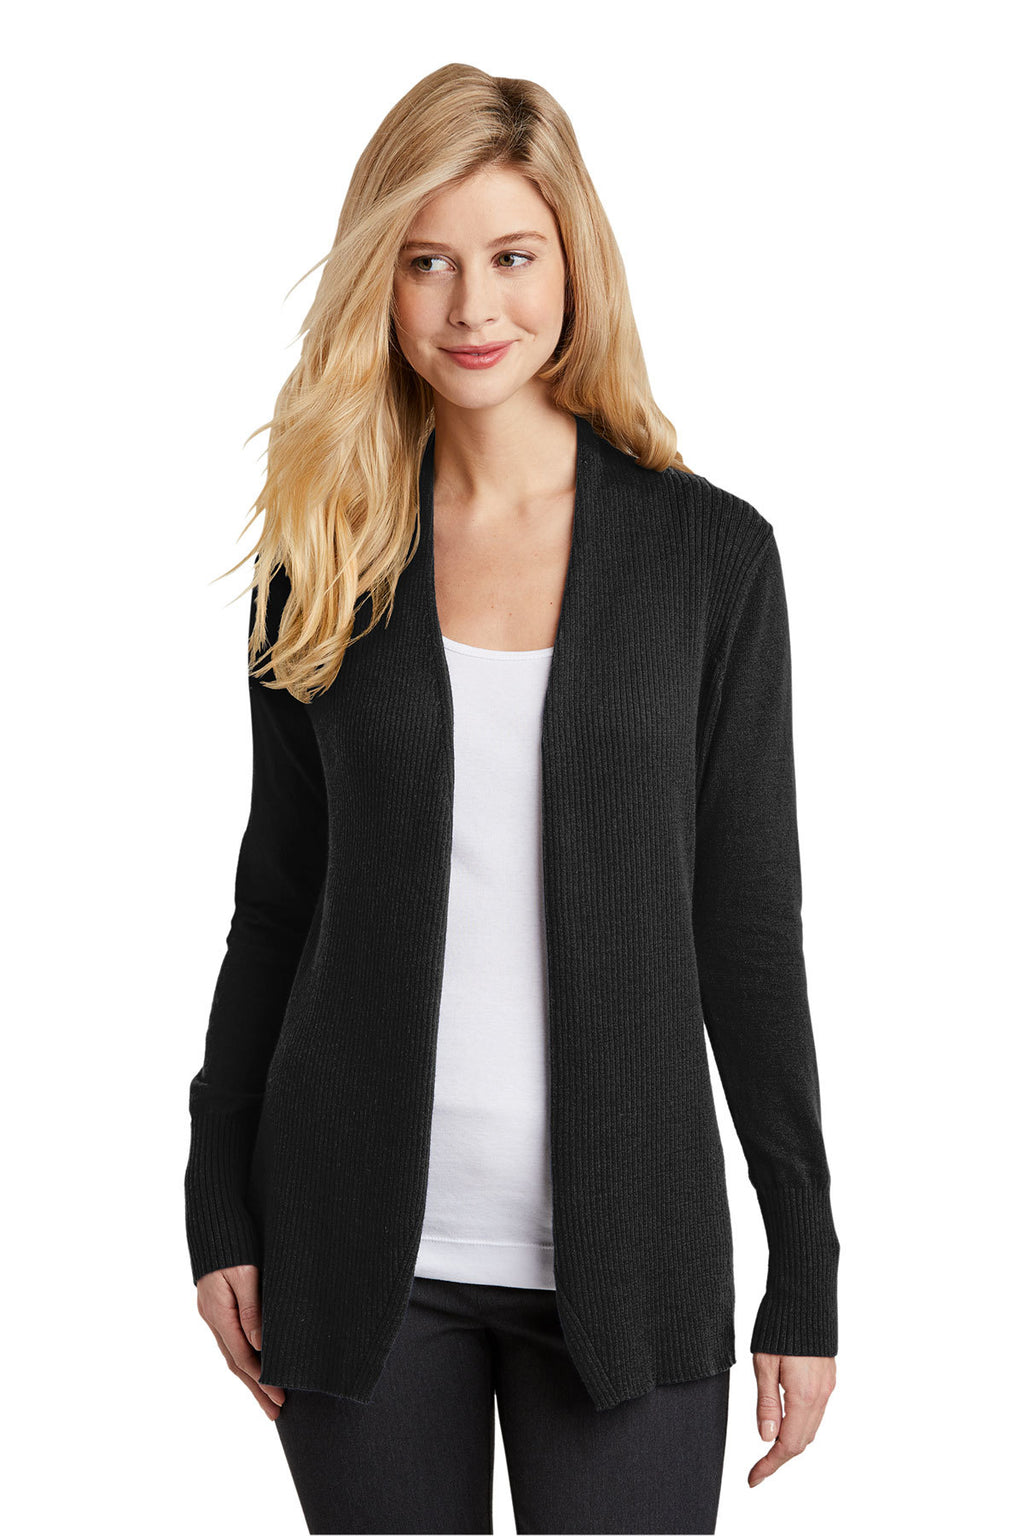 LSW289 Port Authority® Ladies Open Front Cardigan Sweater